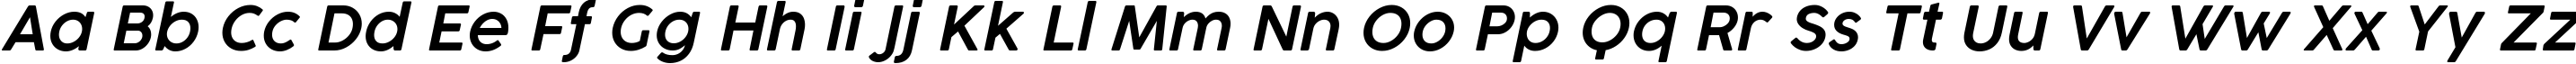 Пример написания английского алфавита шрифтом Cocogoose Pro SemiLight Italic